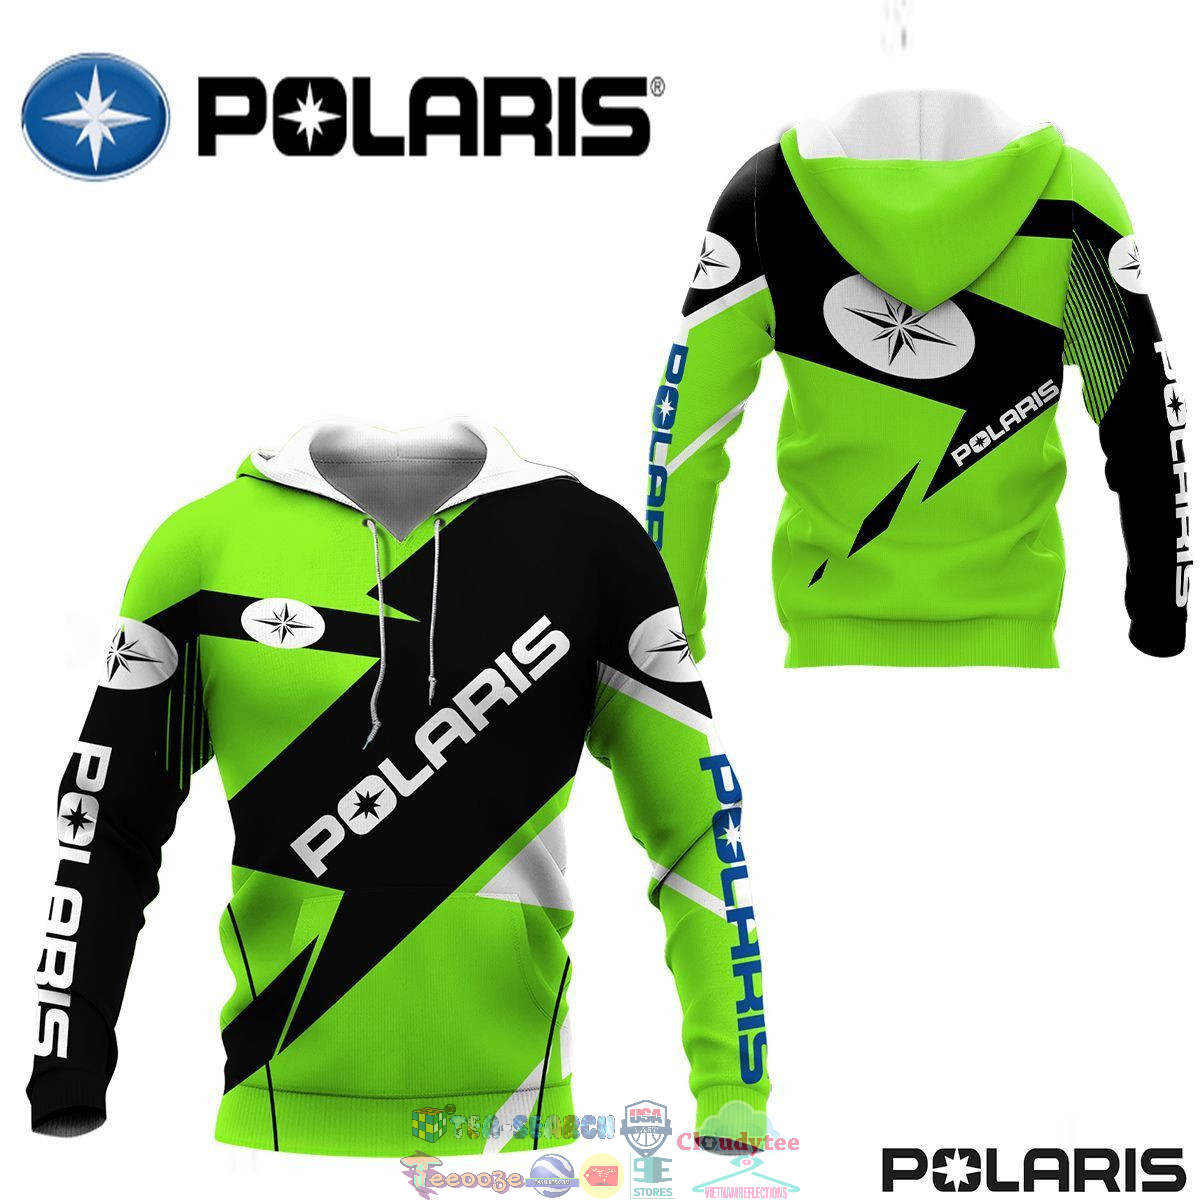 Polaris ver 1 3D hoodie and t-shirt